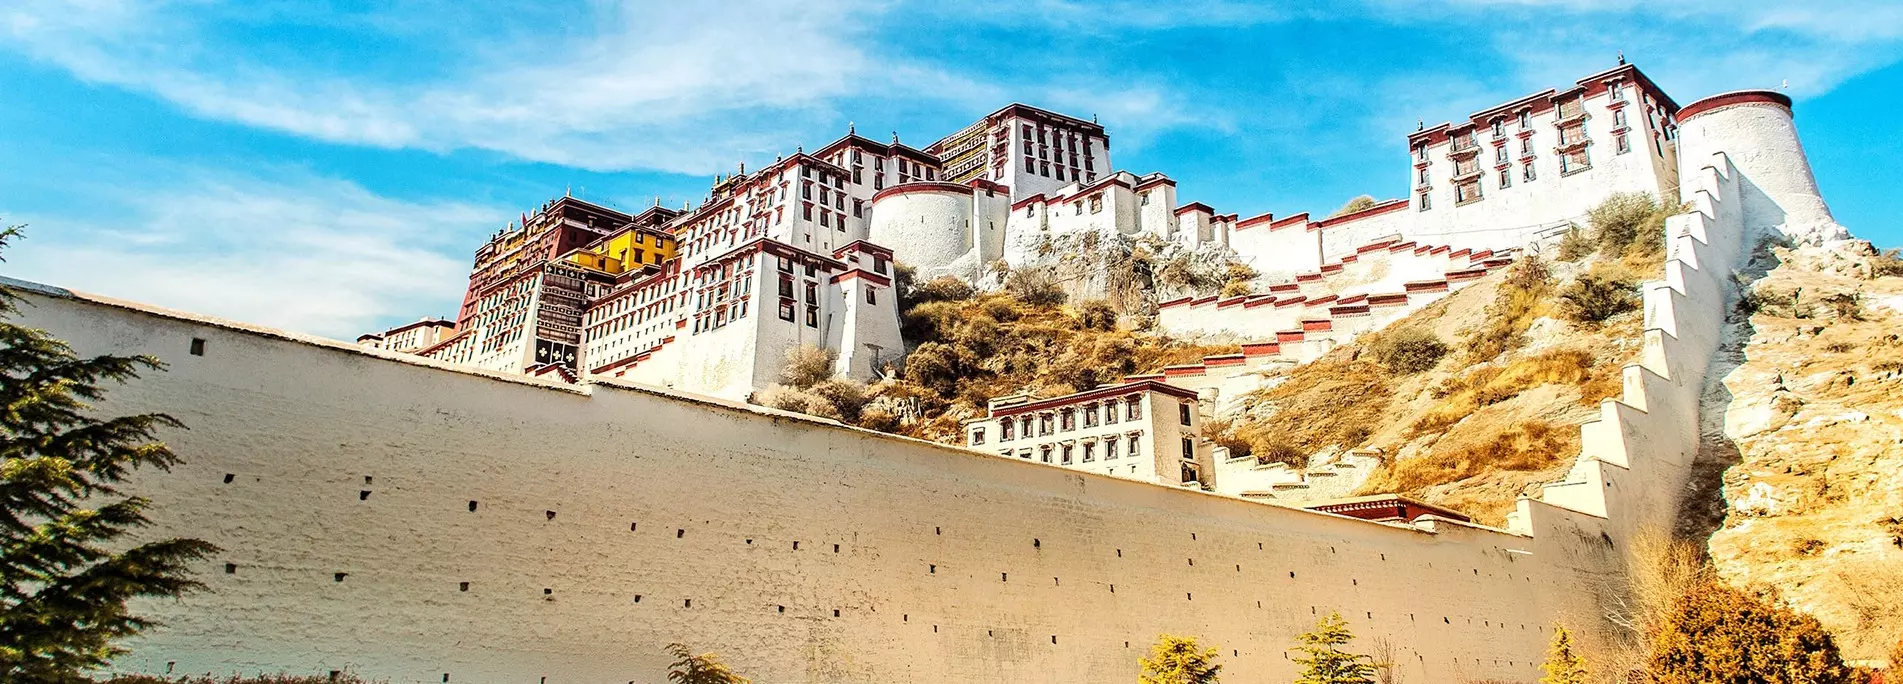 The landmark of Tibet